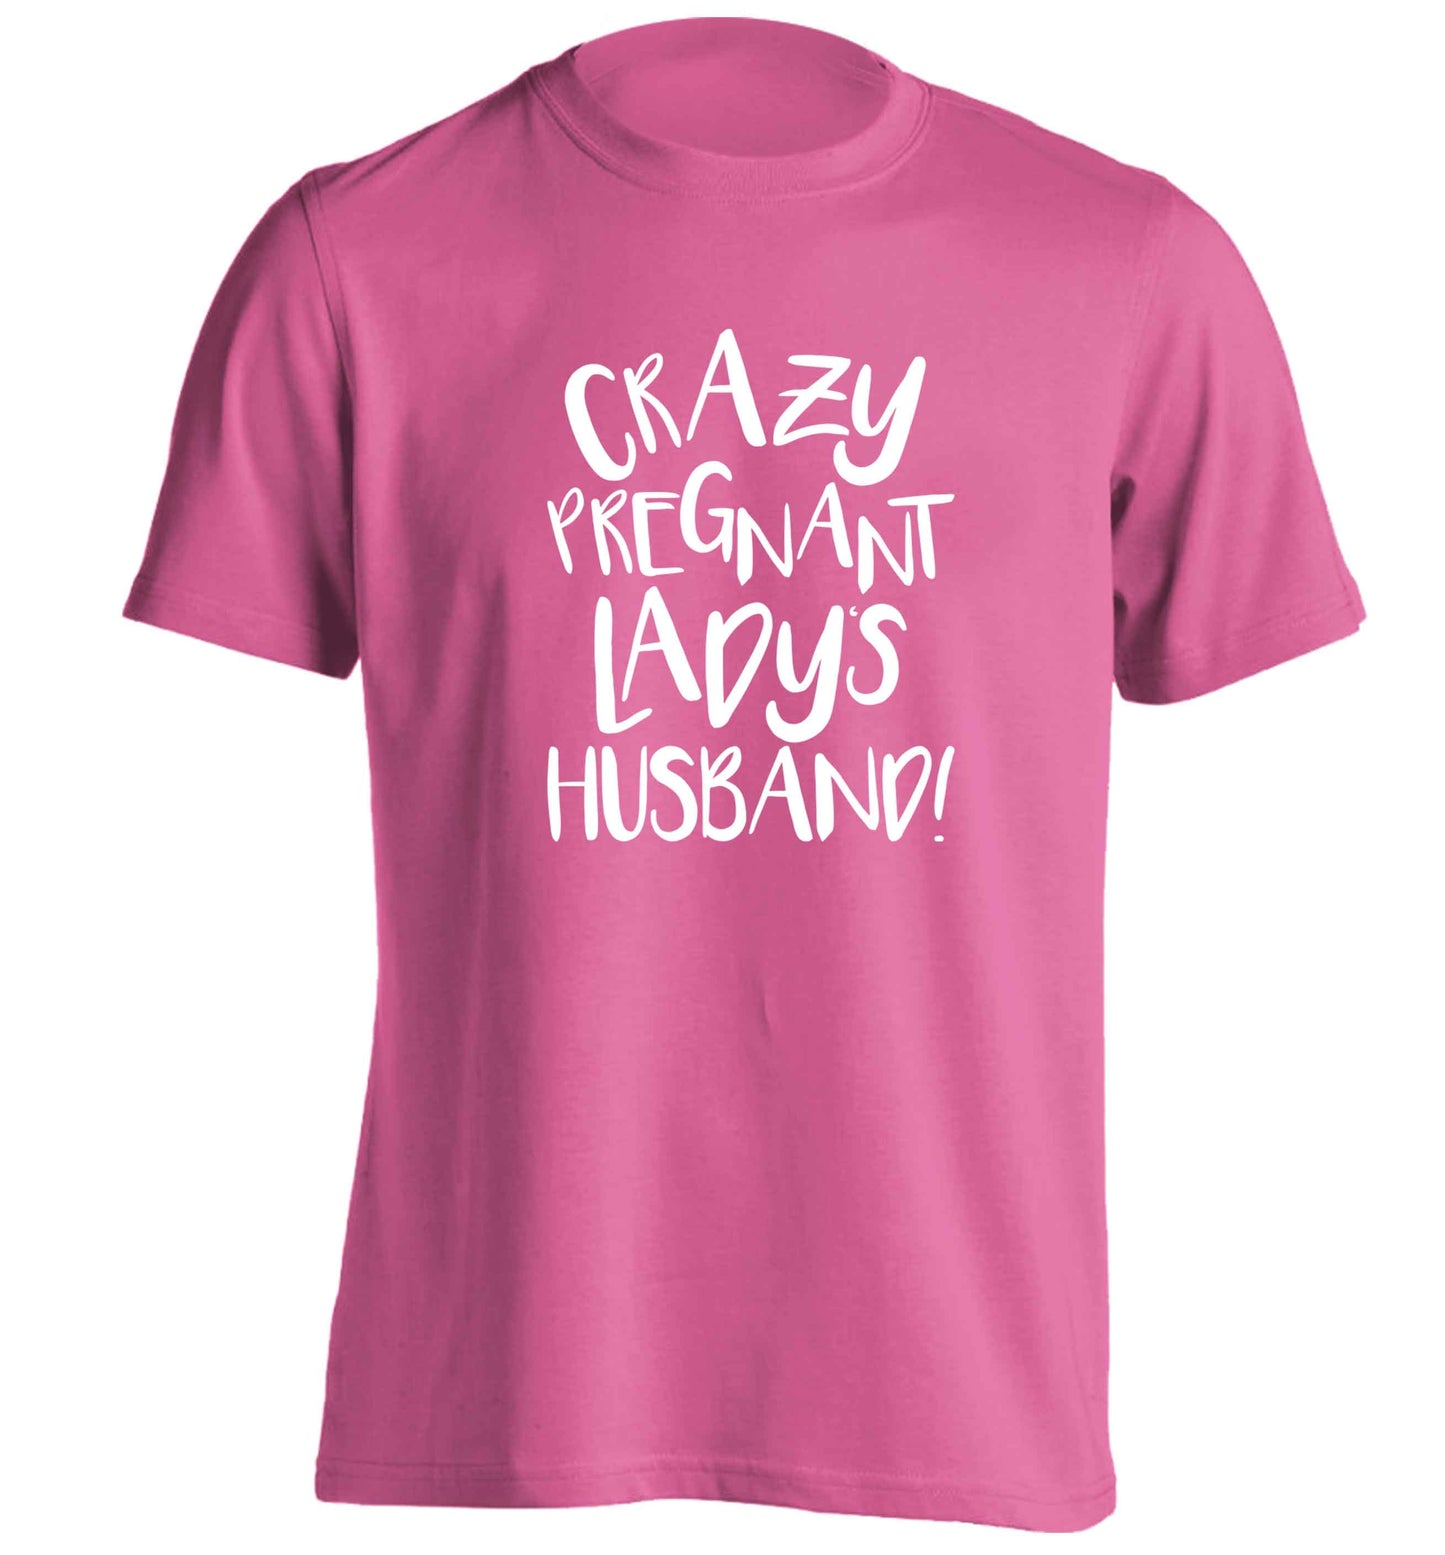 Crazy pregnant lady's husband adults unisex pink Tshirt 2XL